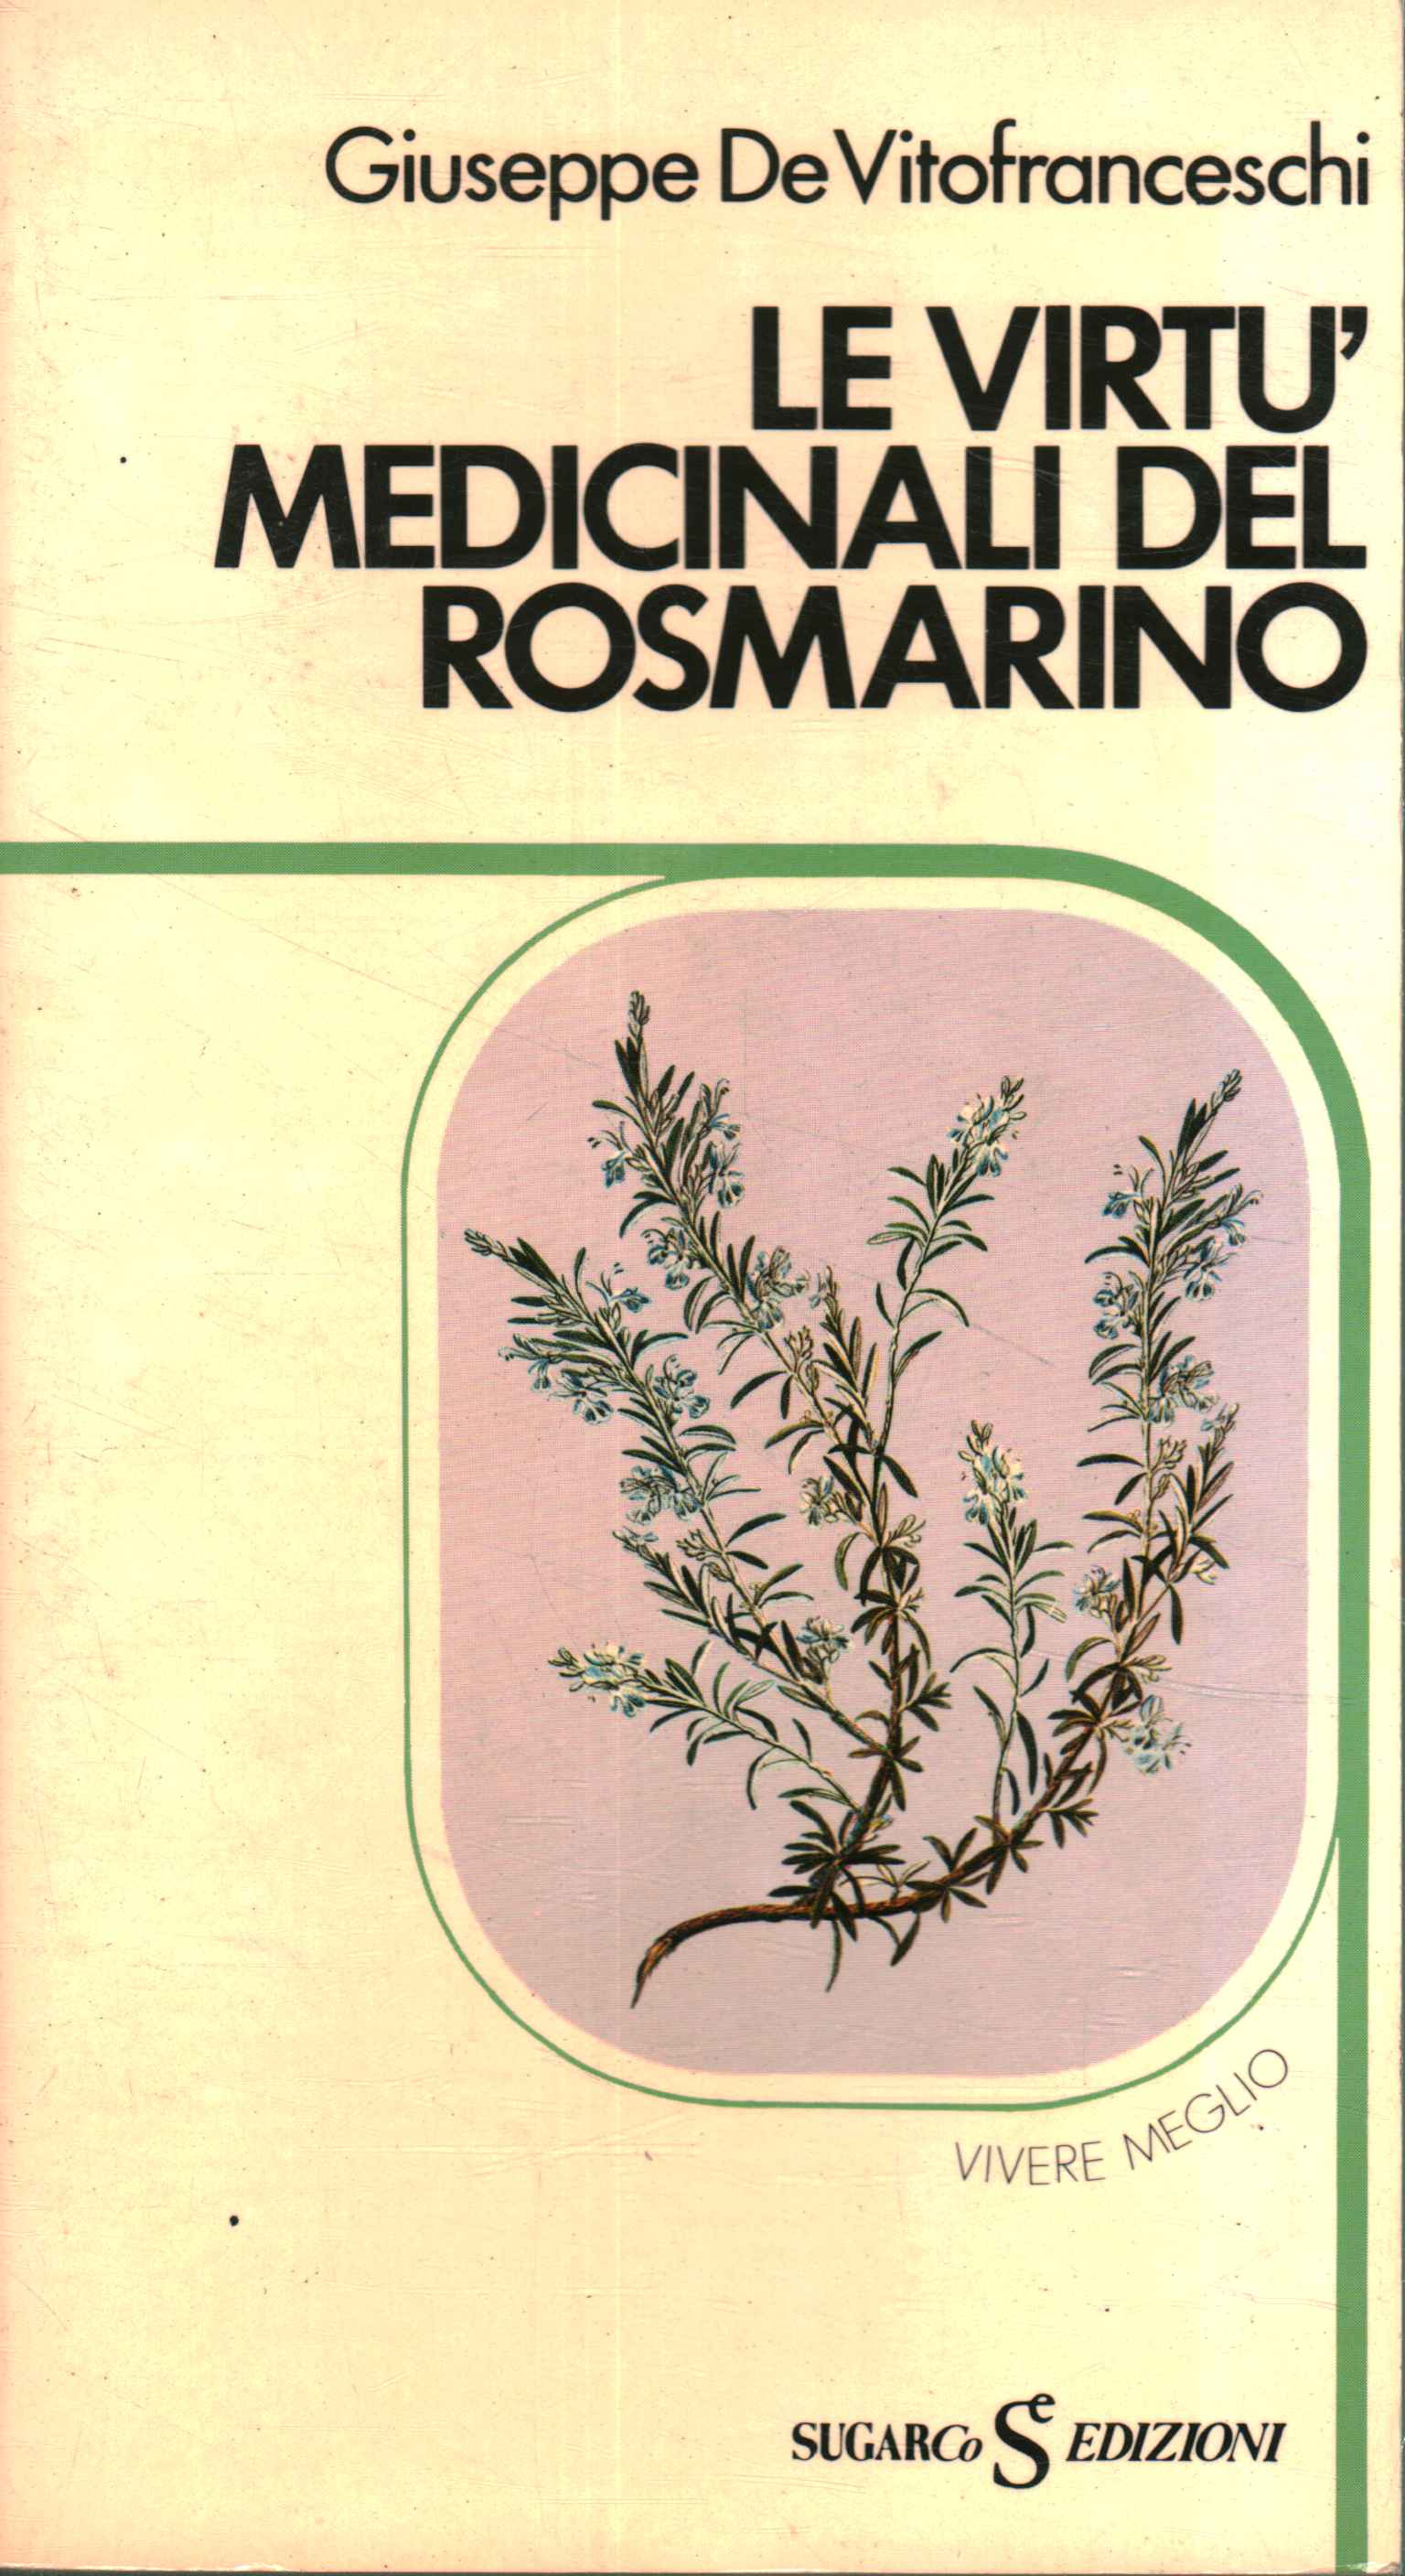 The medicinal virtues of rosemary